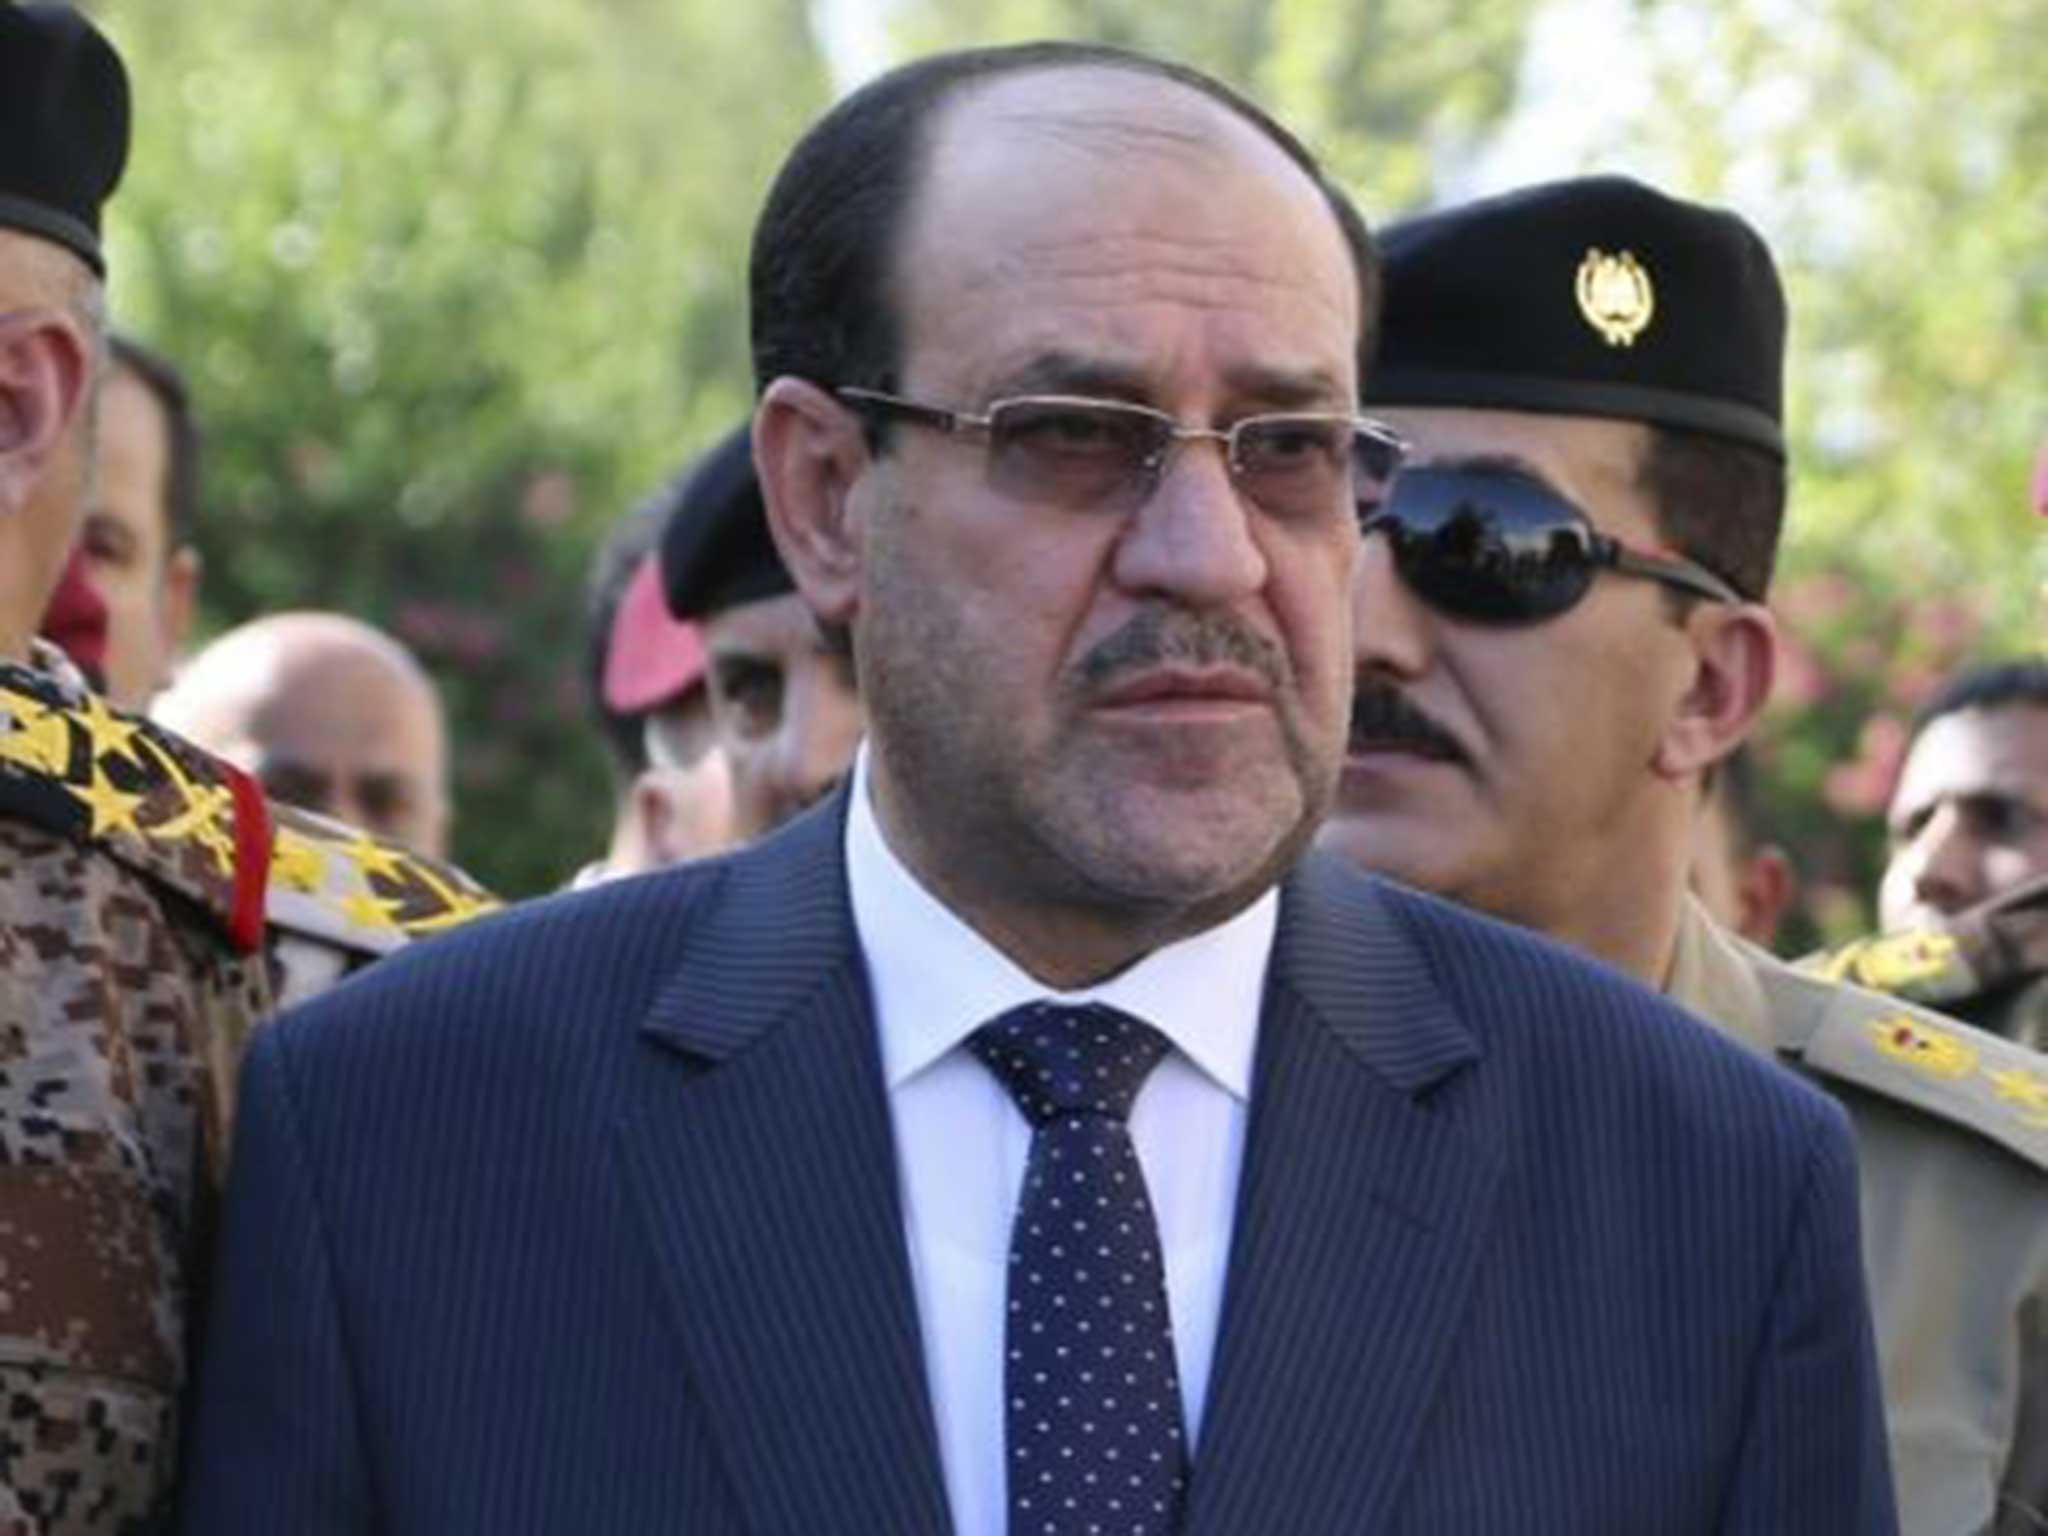 Iraqi leader al-Maliki